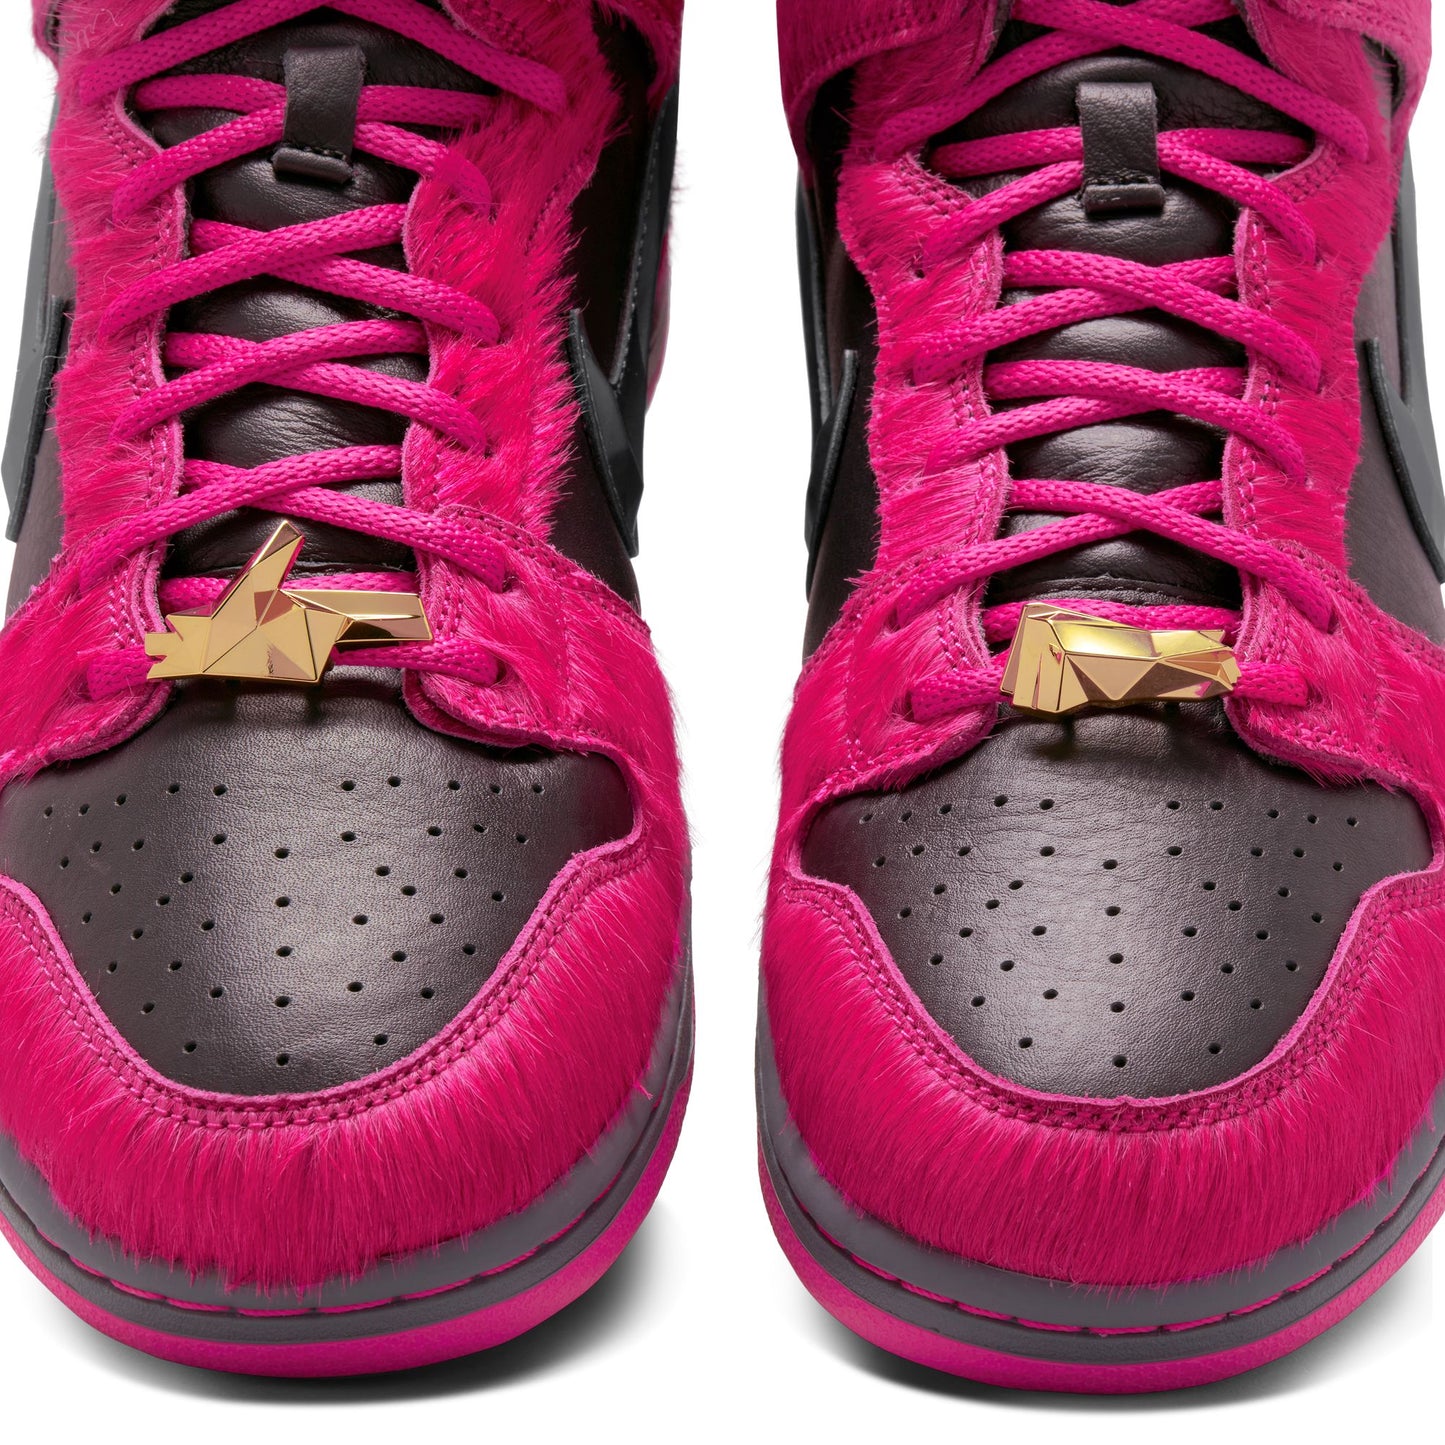 Nike SB Dunk High QS "Run The Jewels" active pink black metallic gold